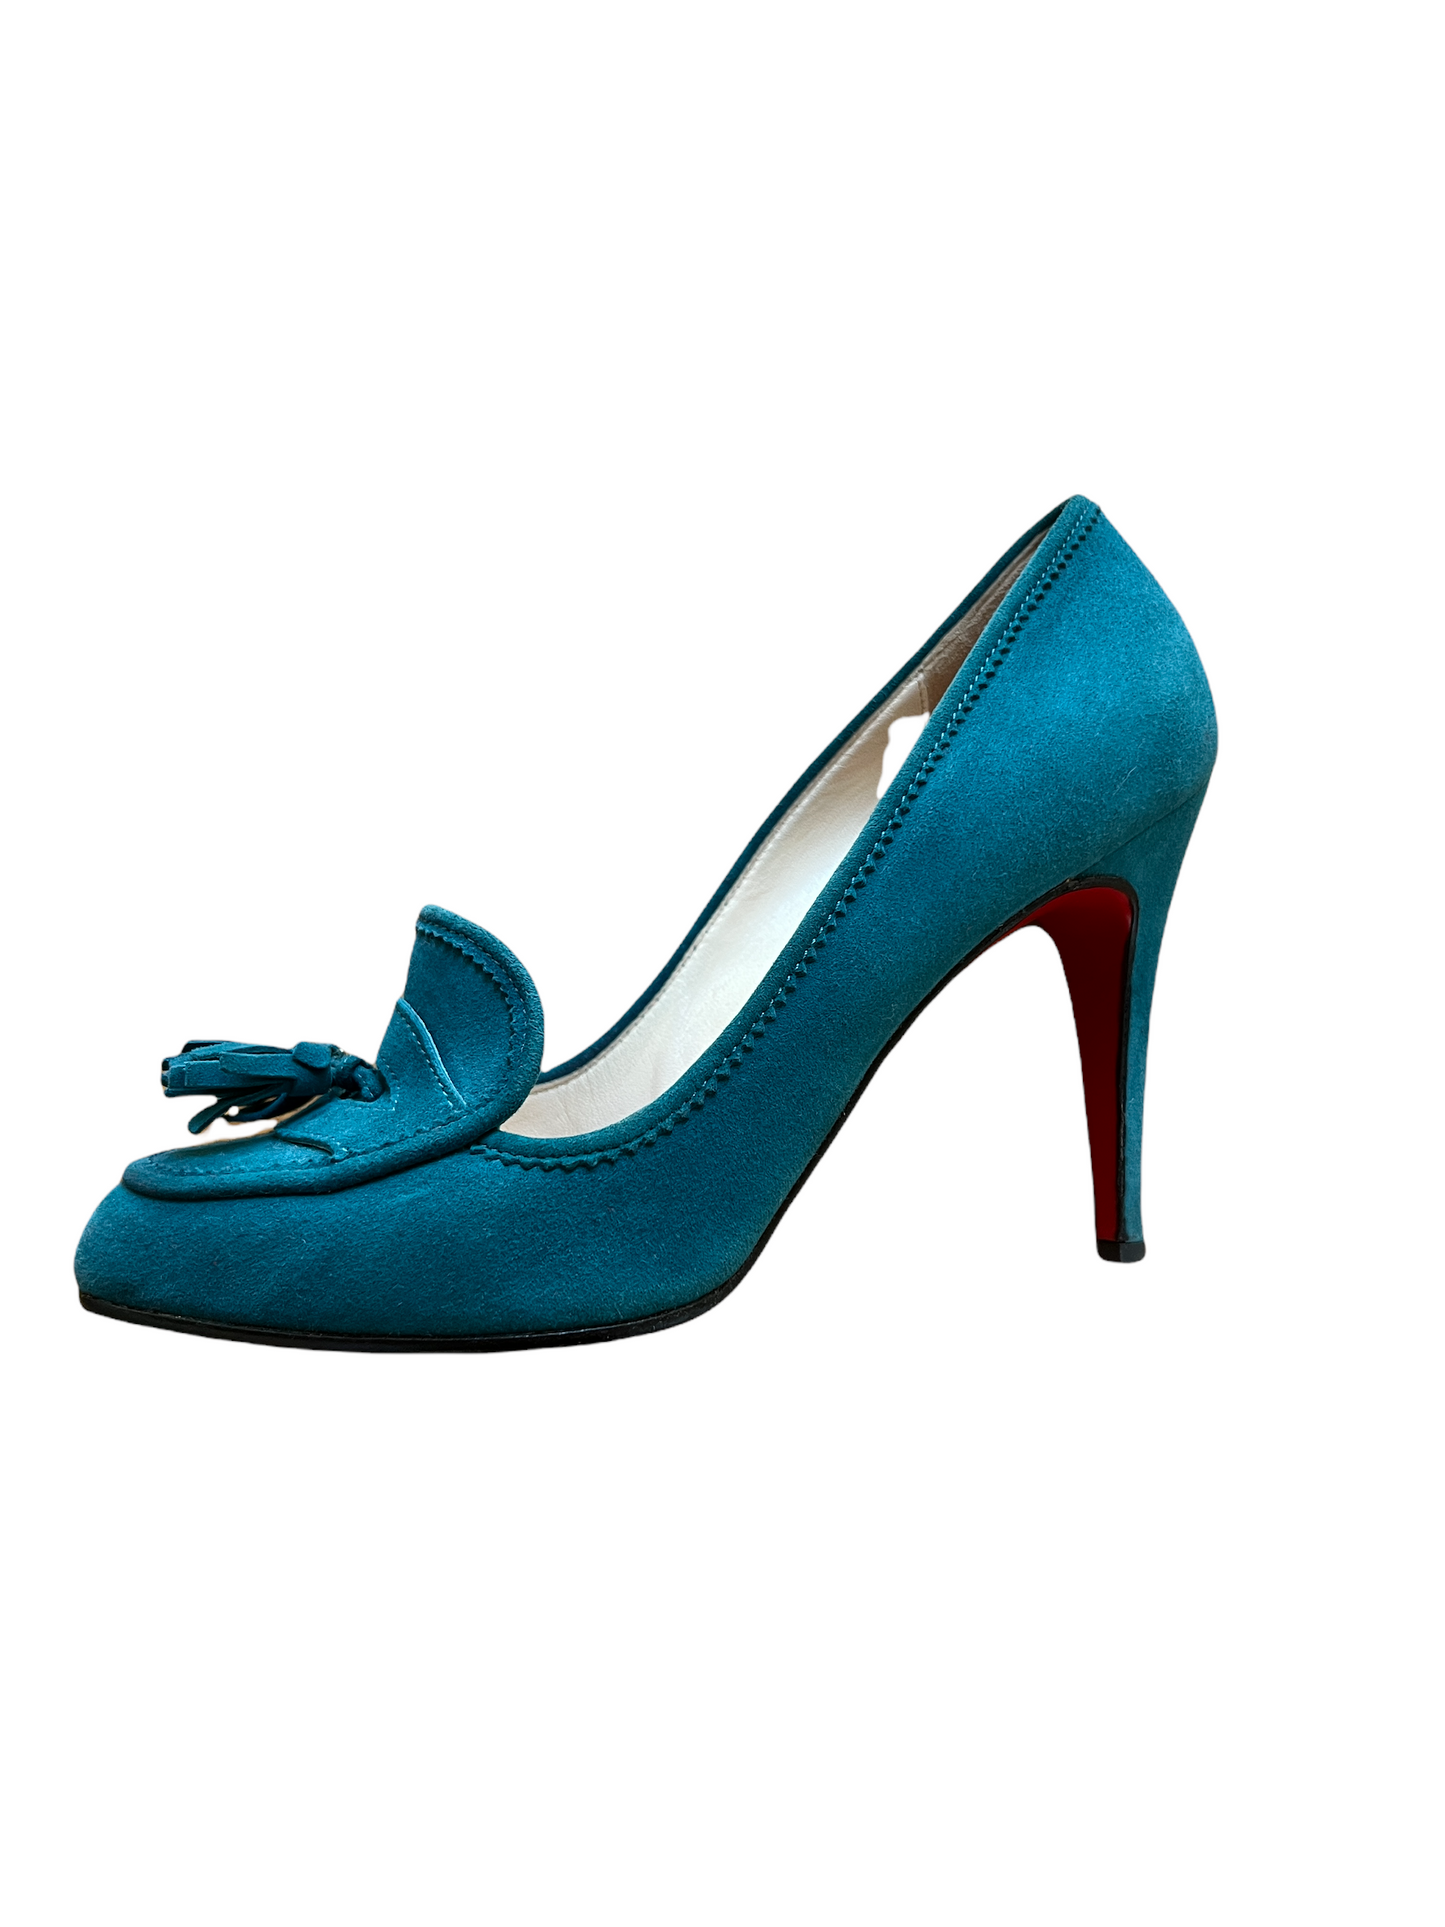 Blue Suede High Heels - 8.5